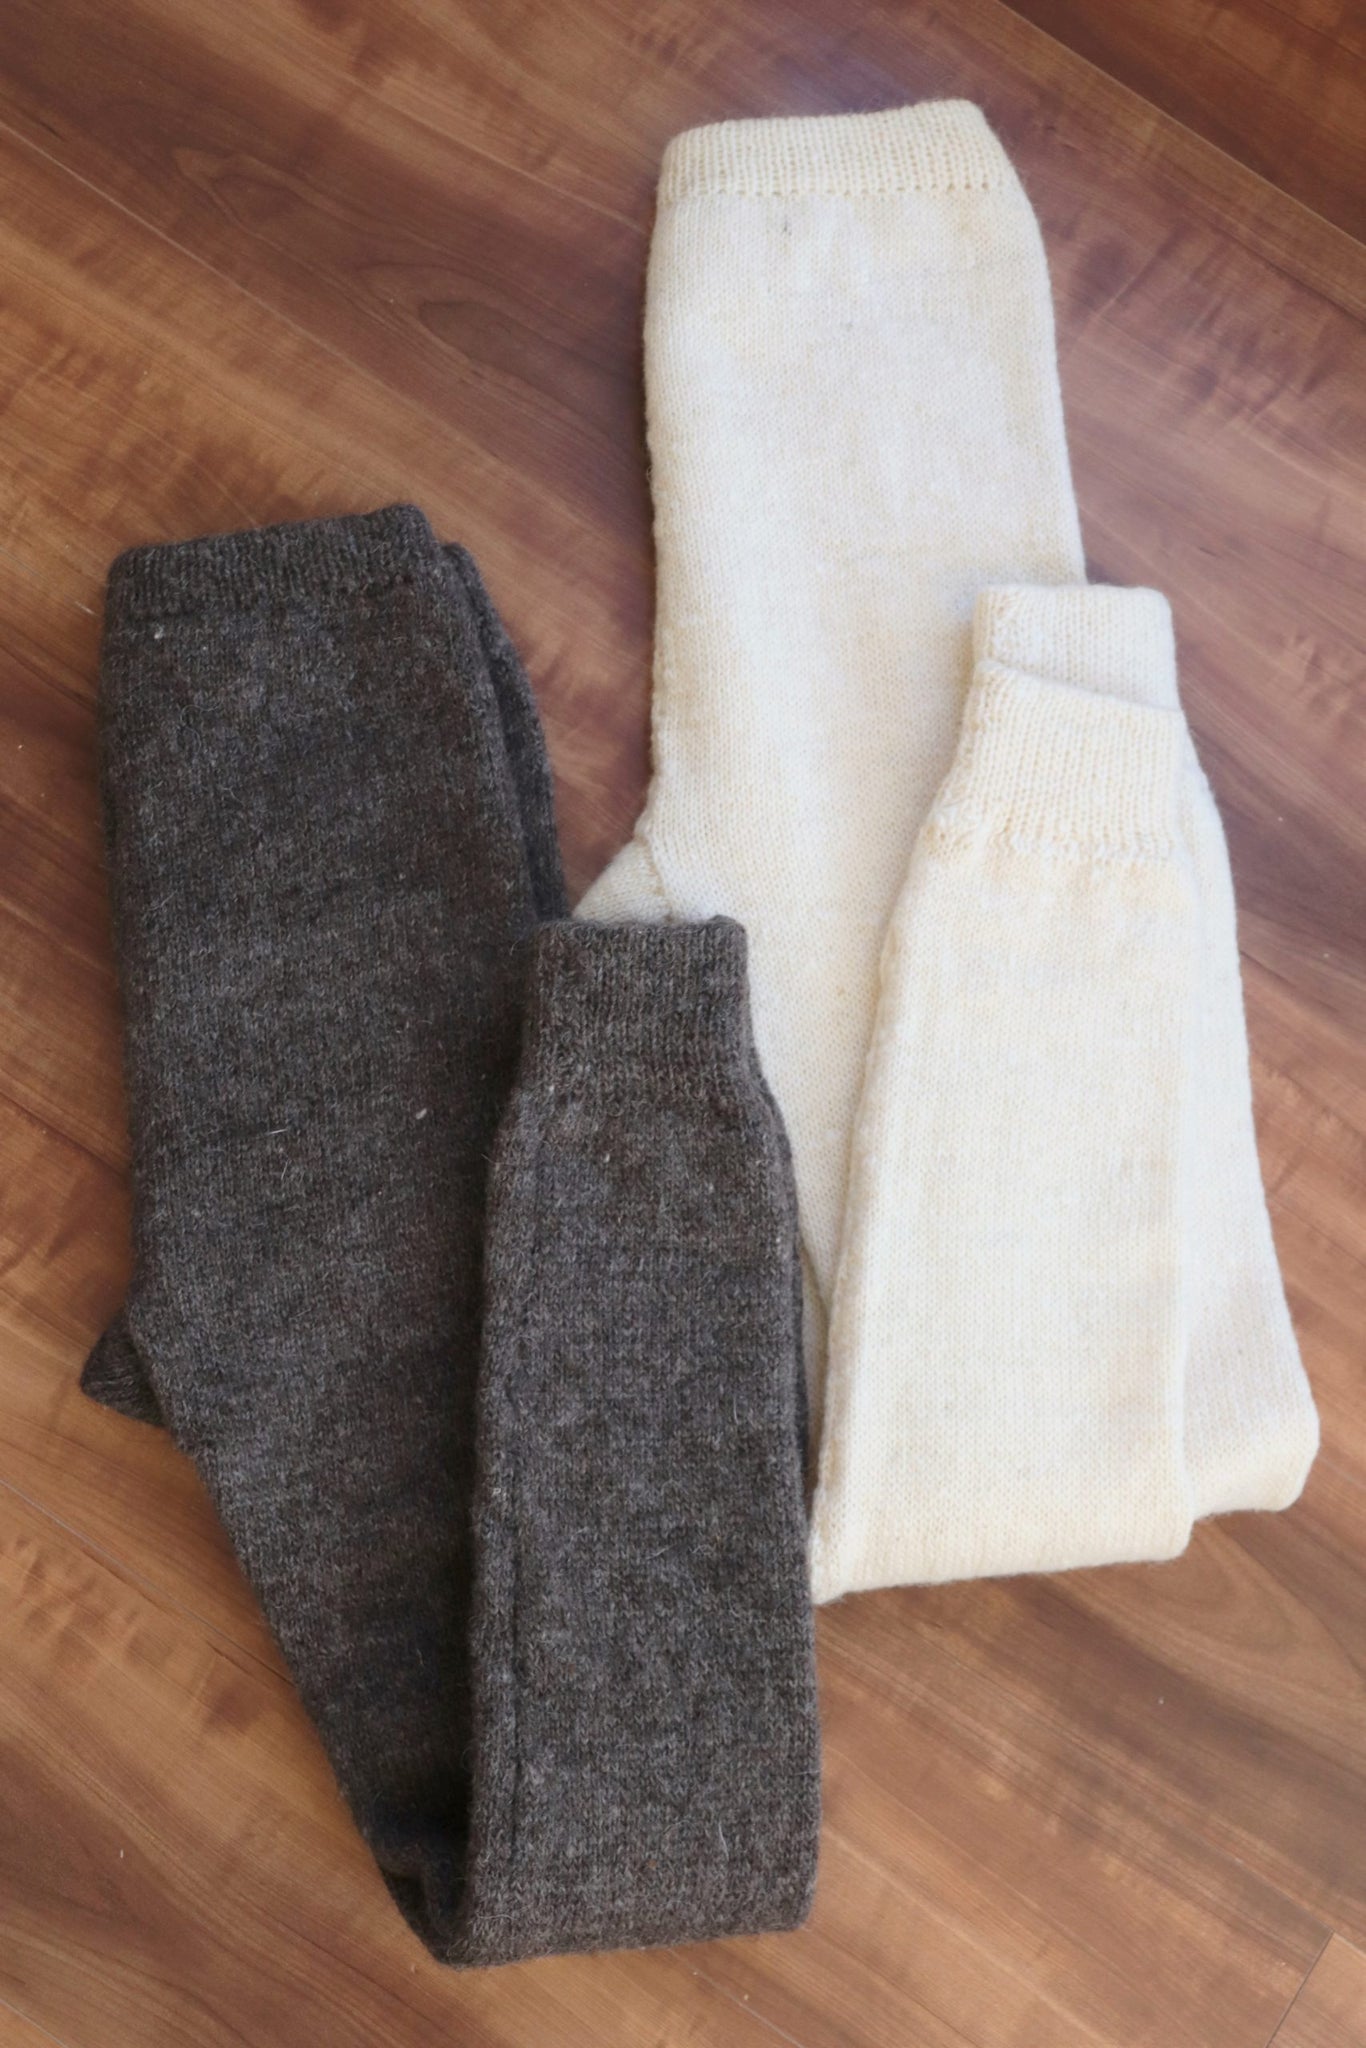 Hand Knit High-Quality Sheep Wool Leggings Brown